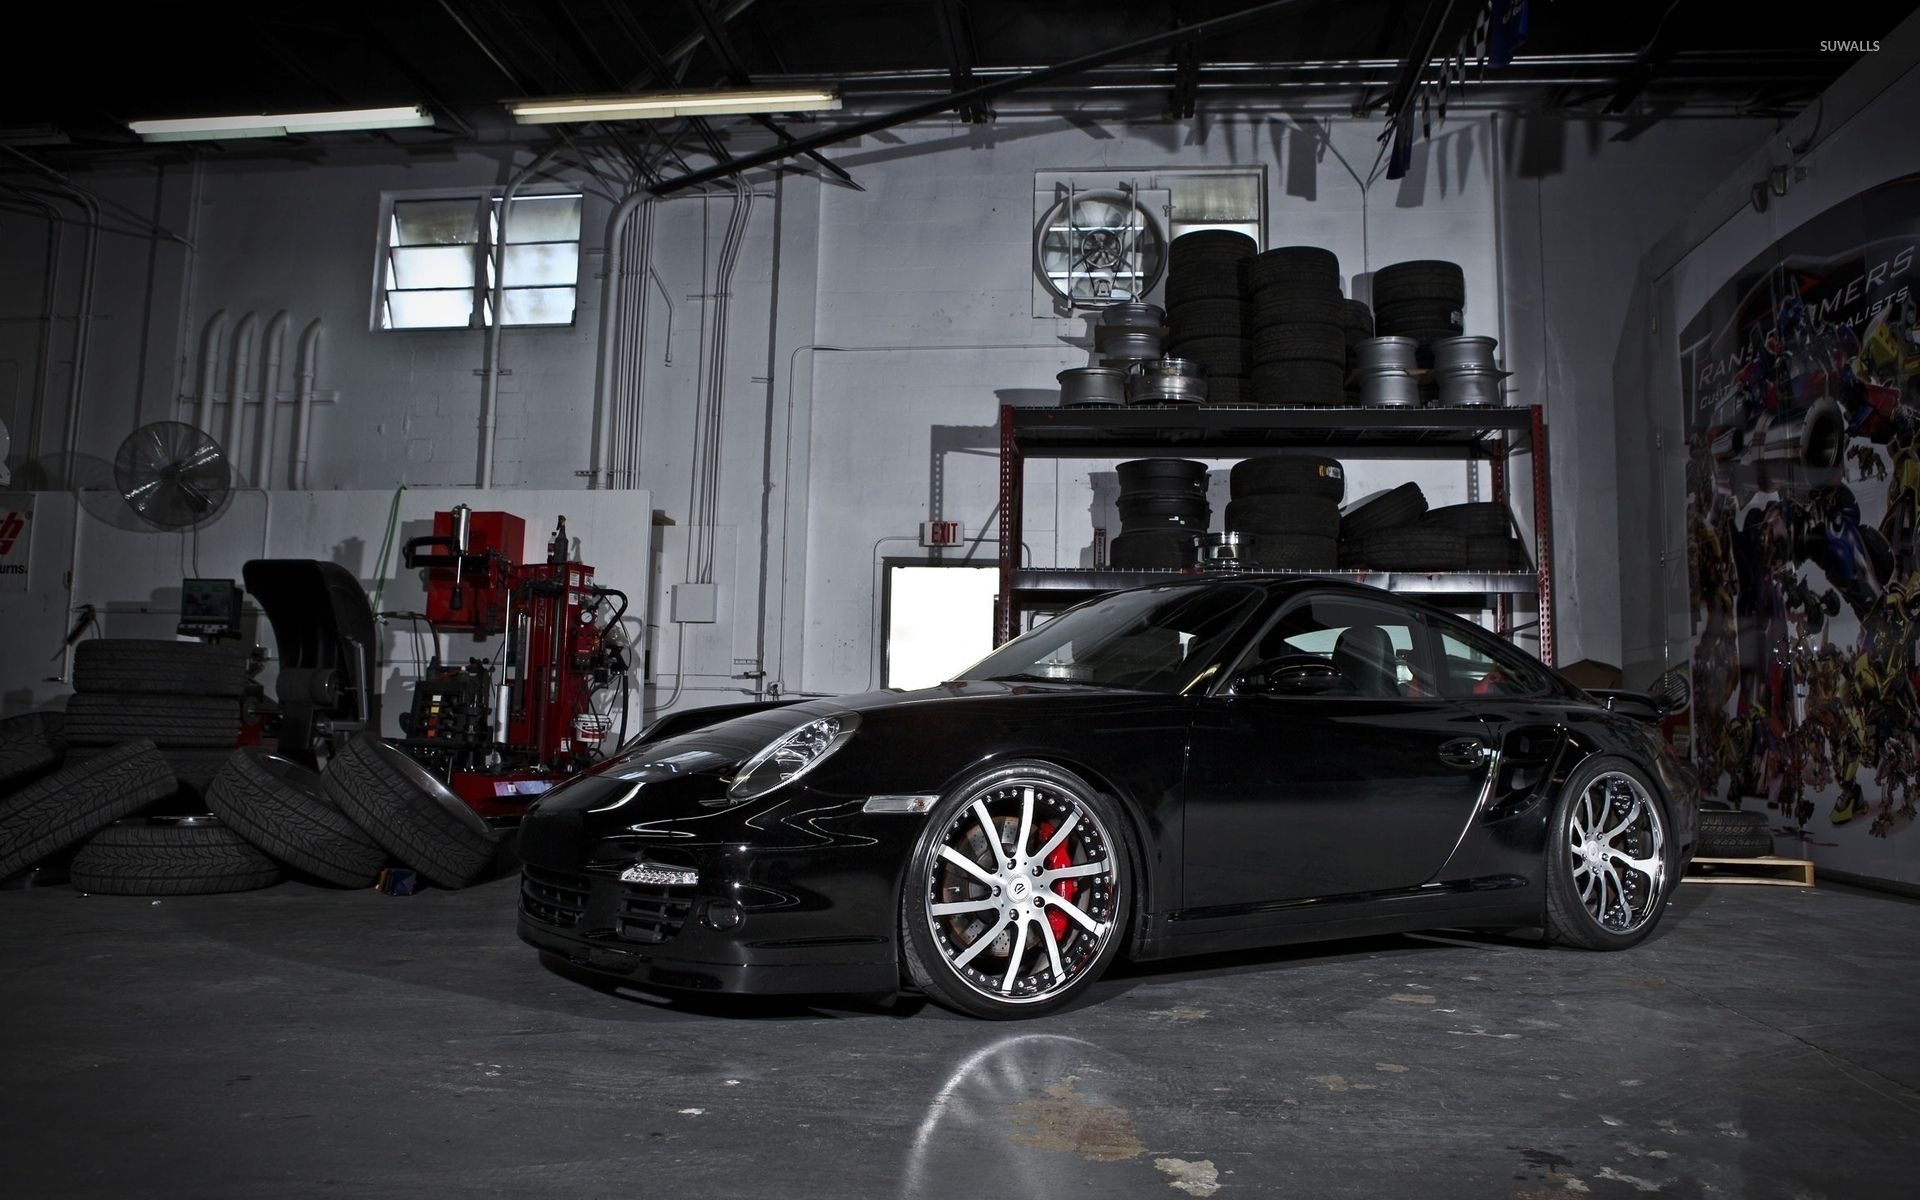 Black 2011 Porsche 911 Carrera in a garage wallpaper wallpaper